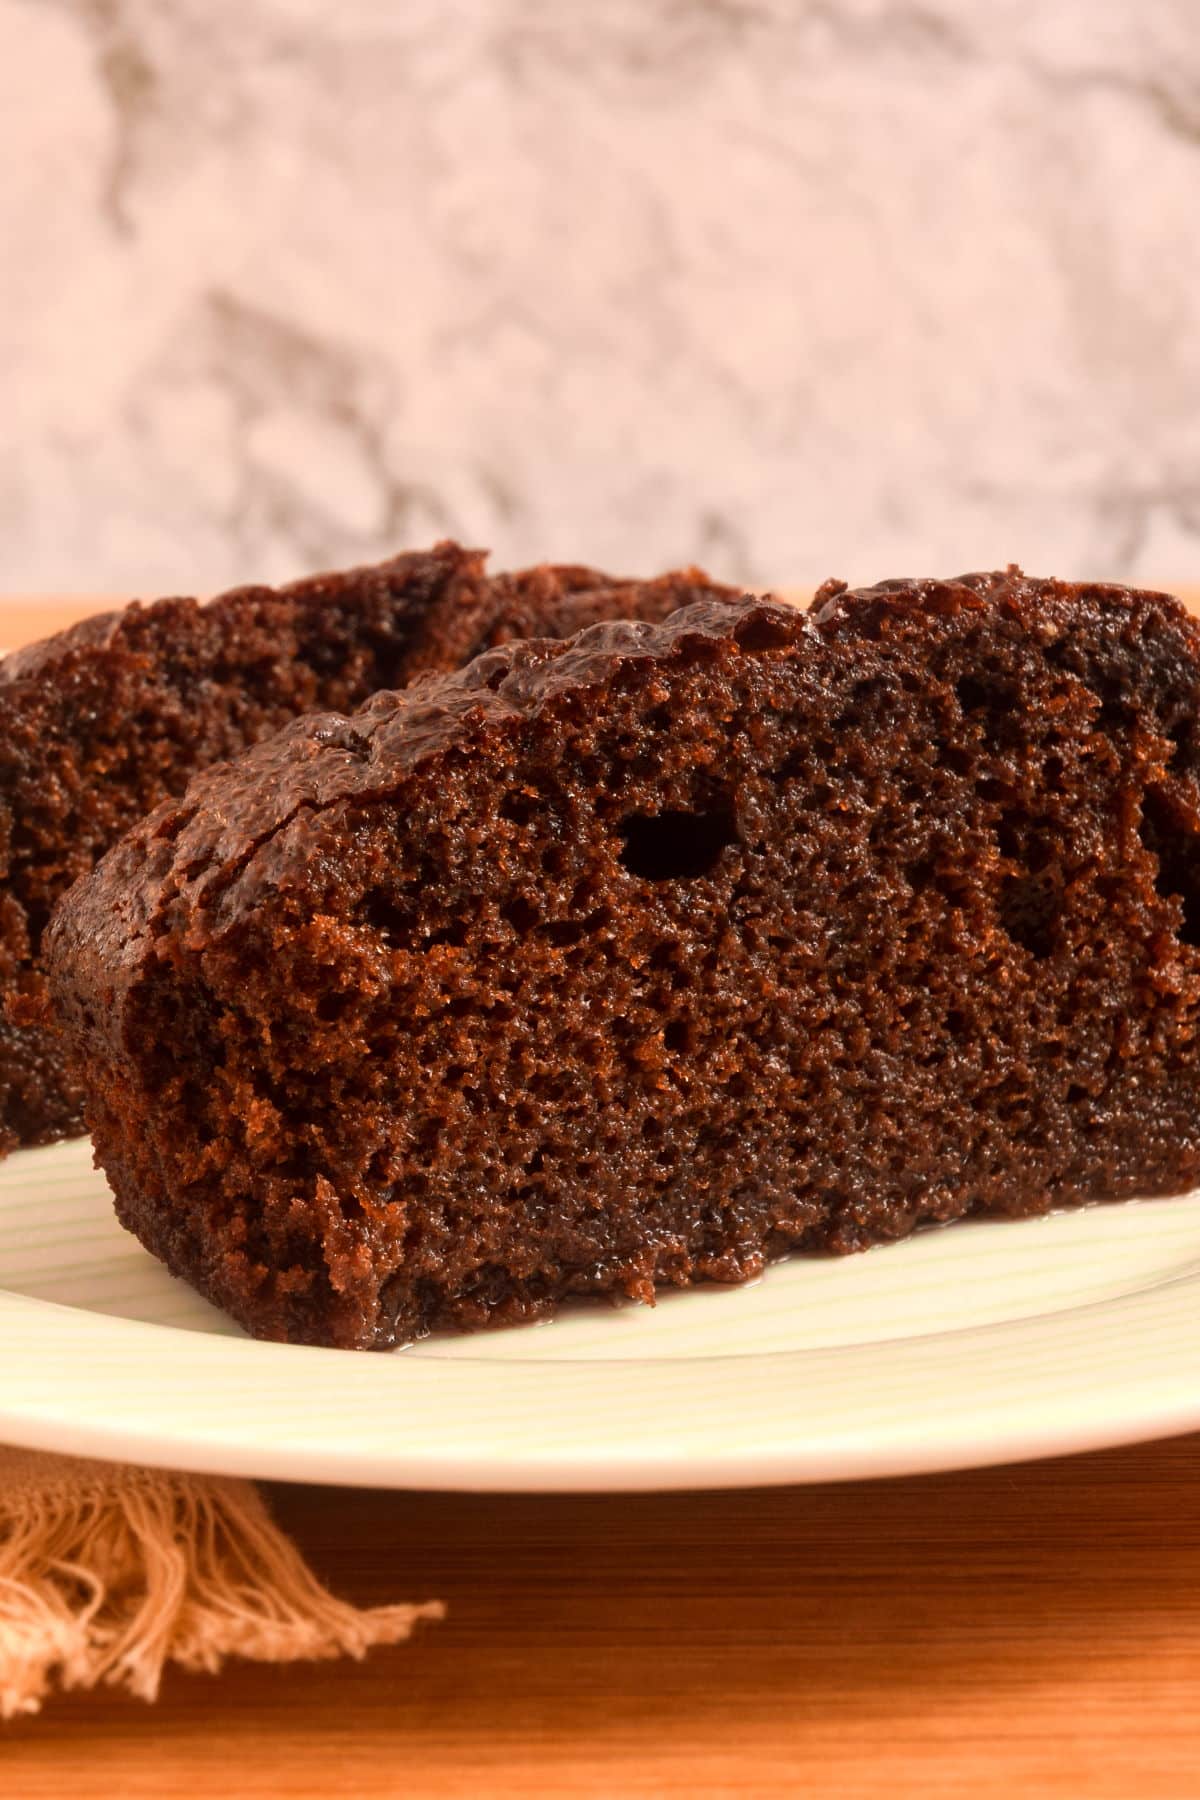 Moist chocolate cake on plate.